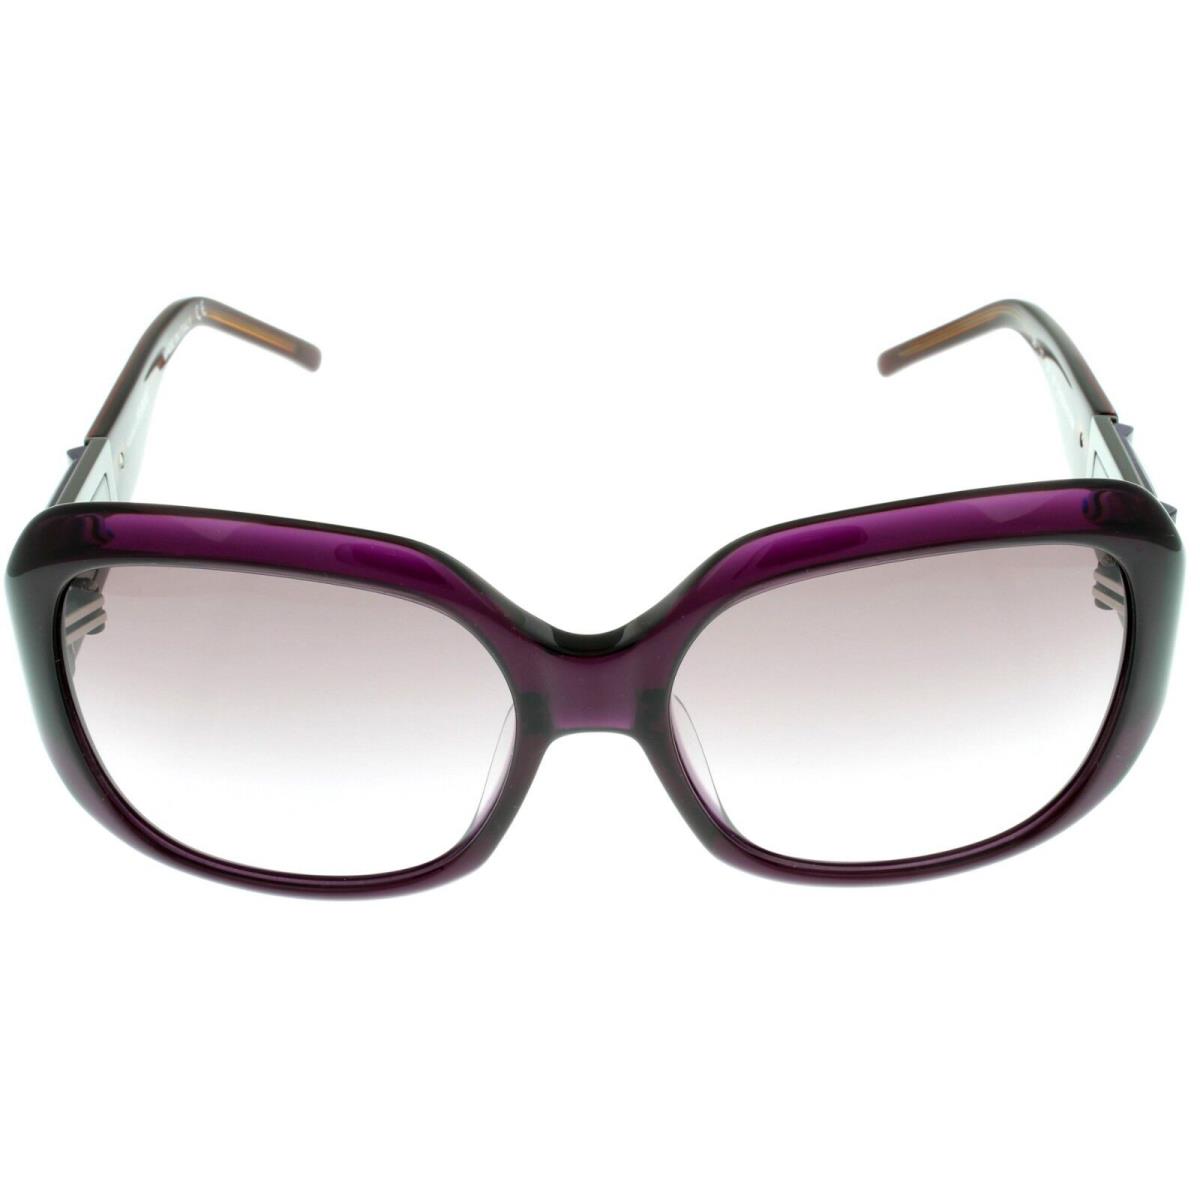 Gianfranco Ferre Sunglasses Women Rectangular Violet GF958 03